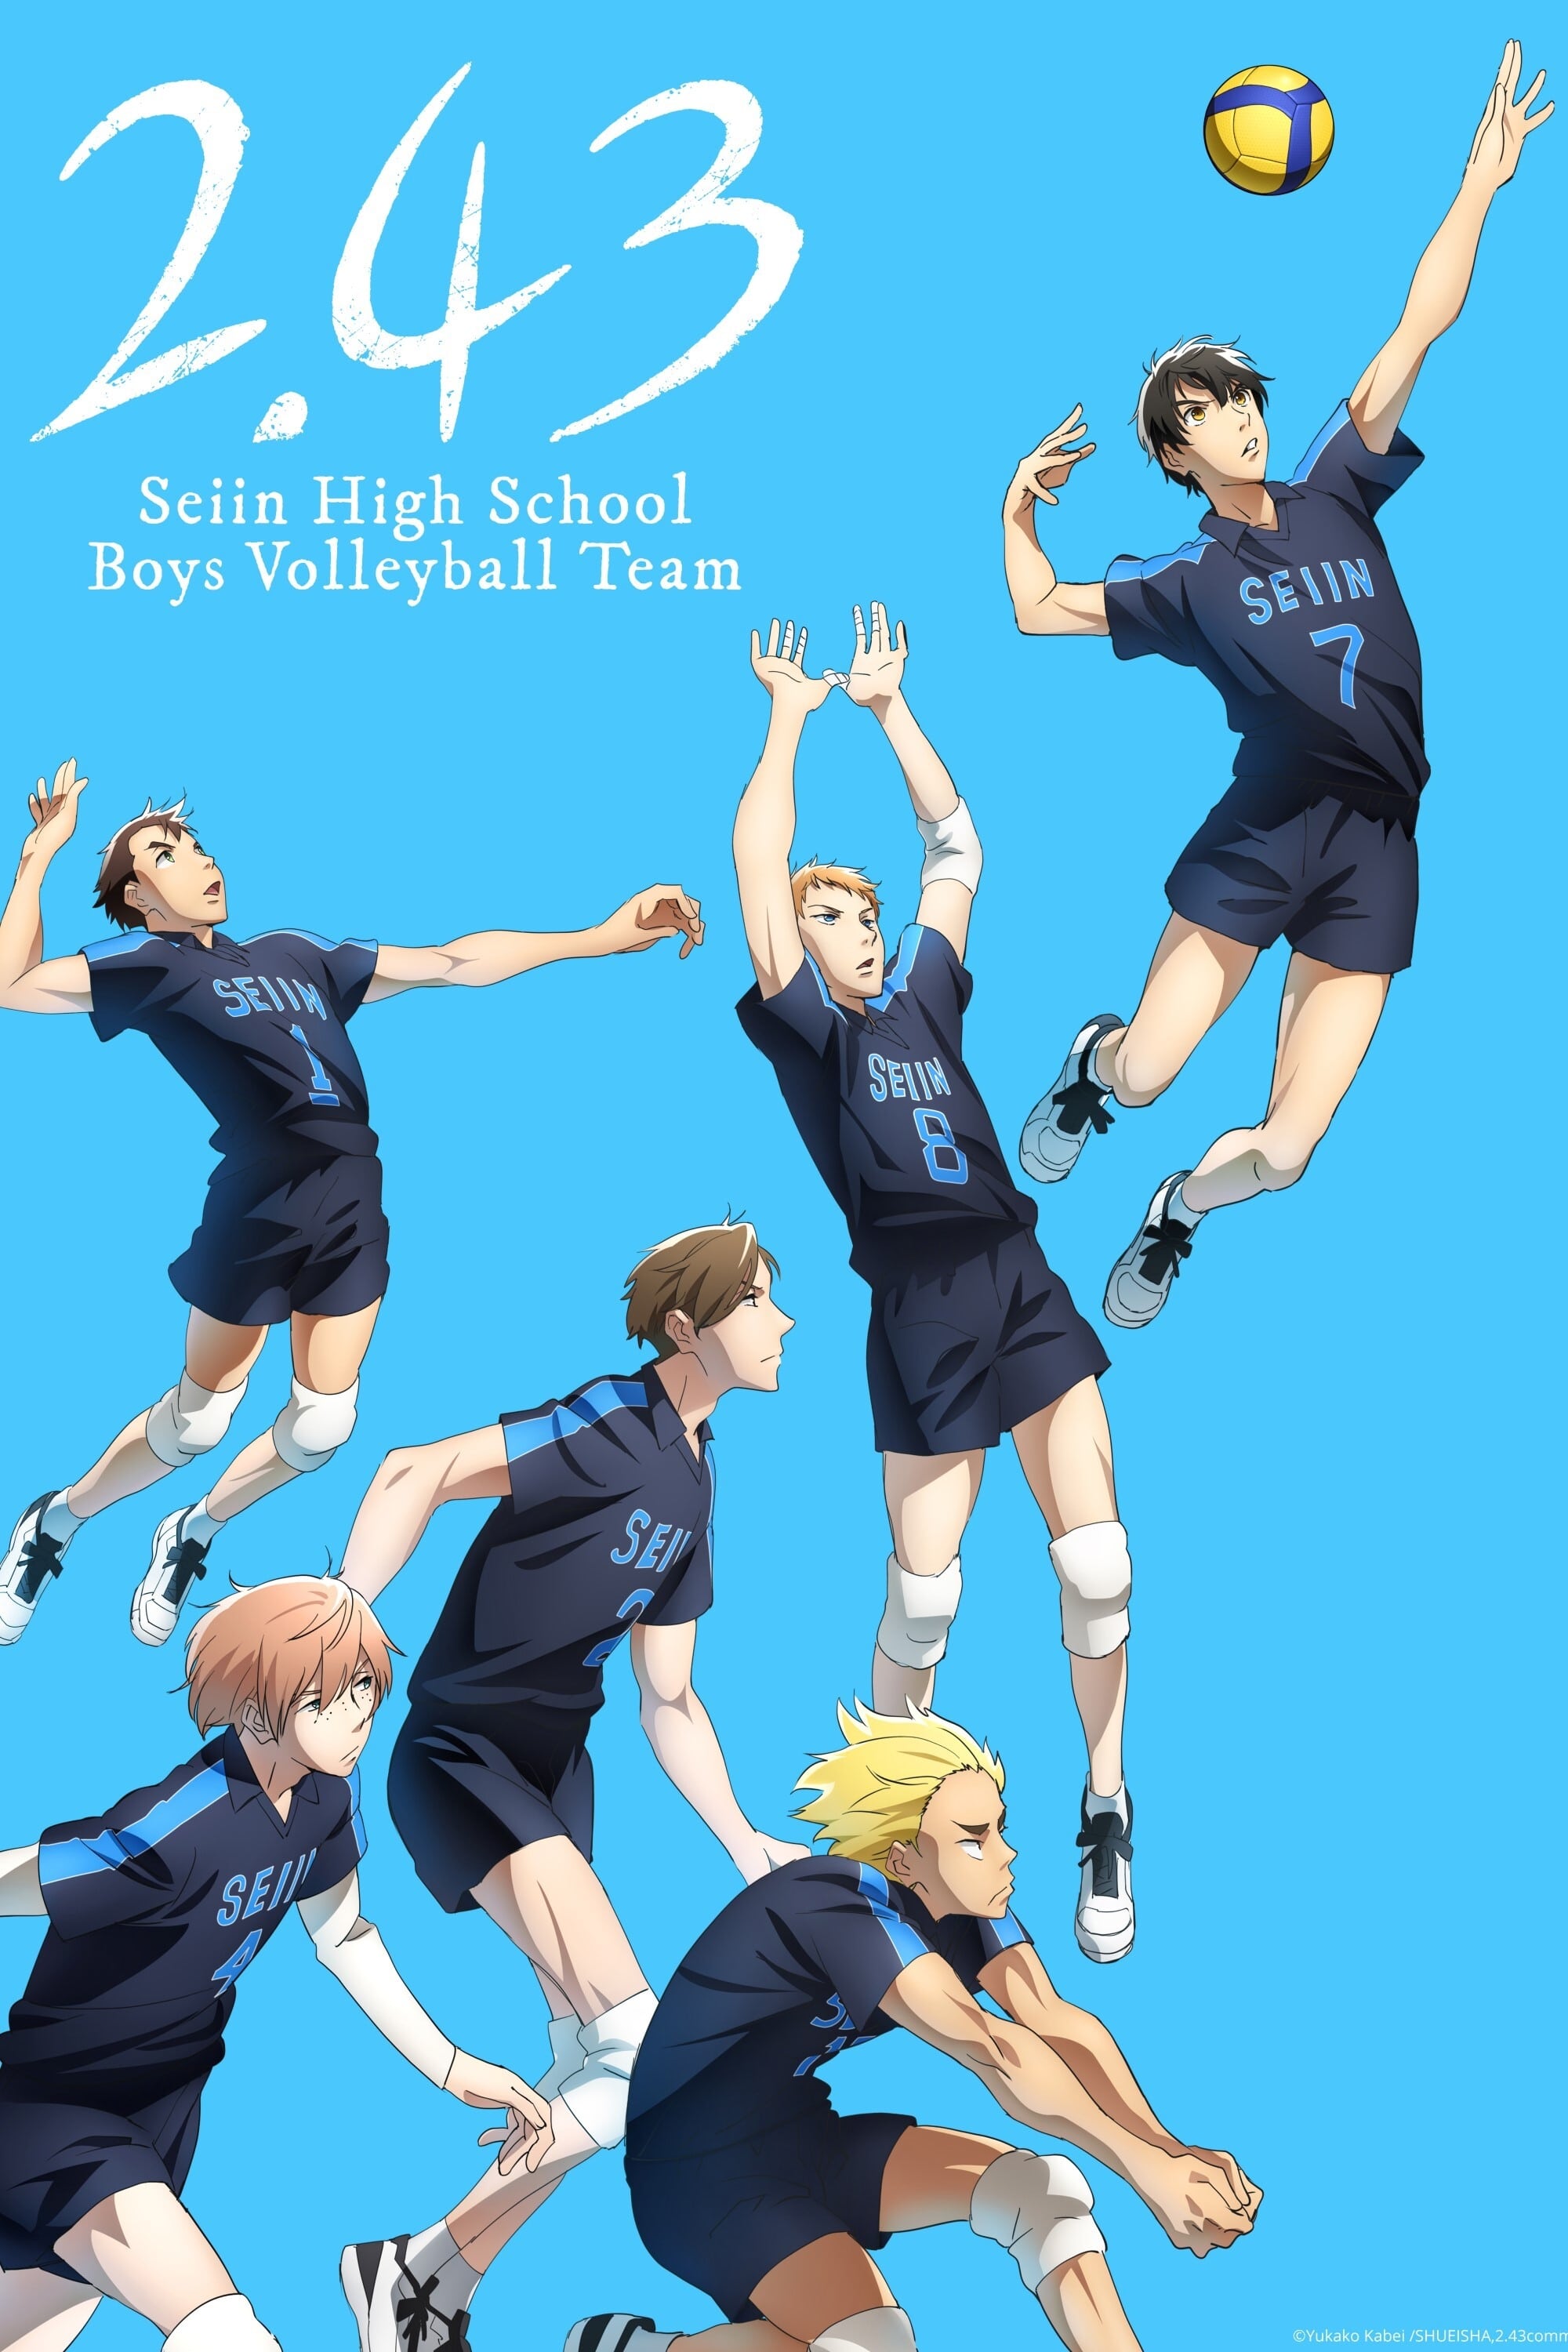 Caratula de 2.43 清陰高校男子バレー部 (2.43: Seiin High School Boys Volleyball Team) 